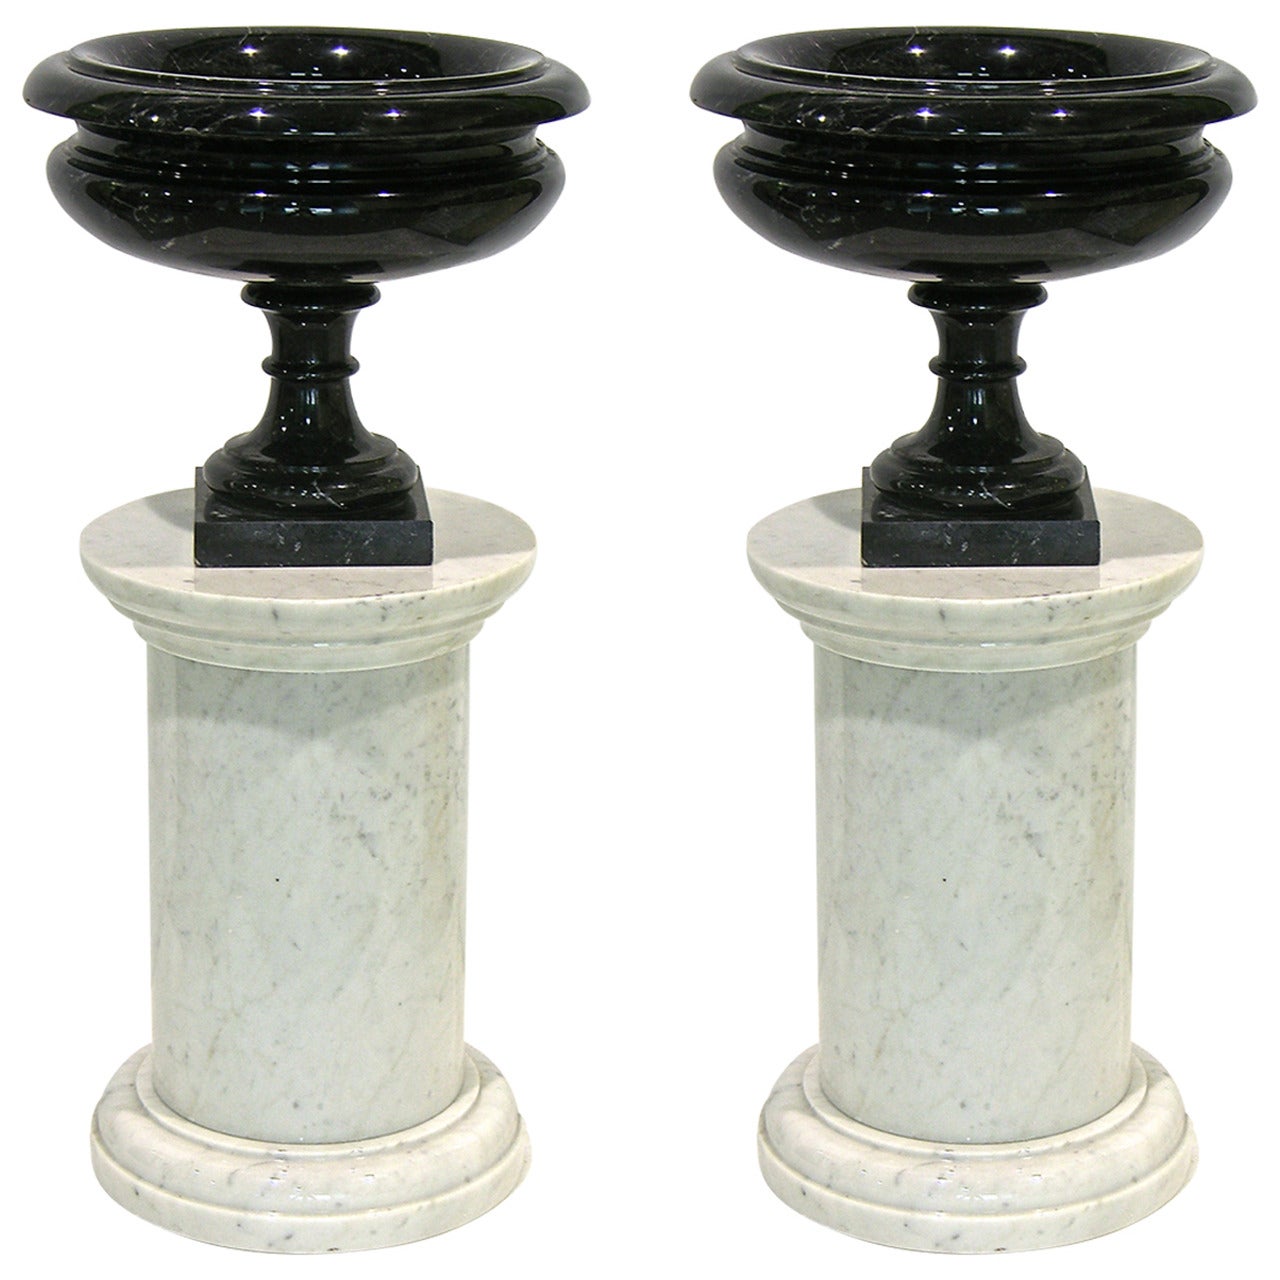 Italian Rare Pair of Late Art Deco Black and White Urns on Carrara Columns